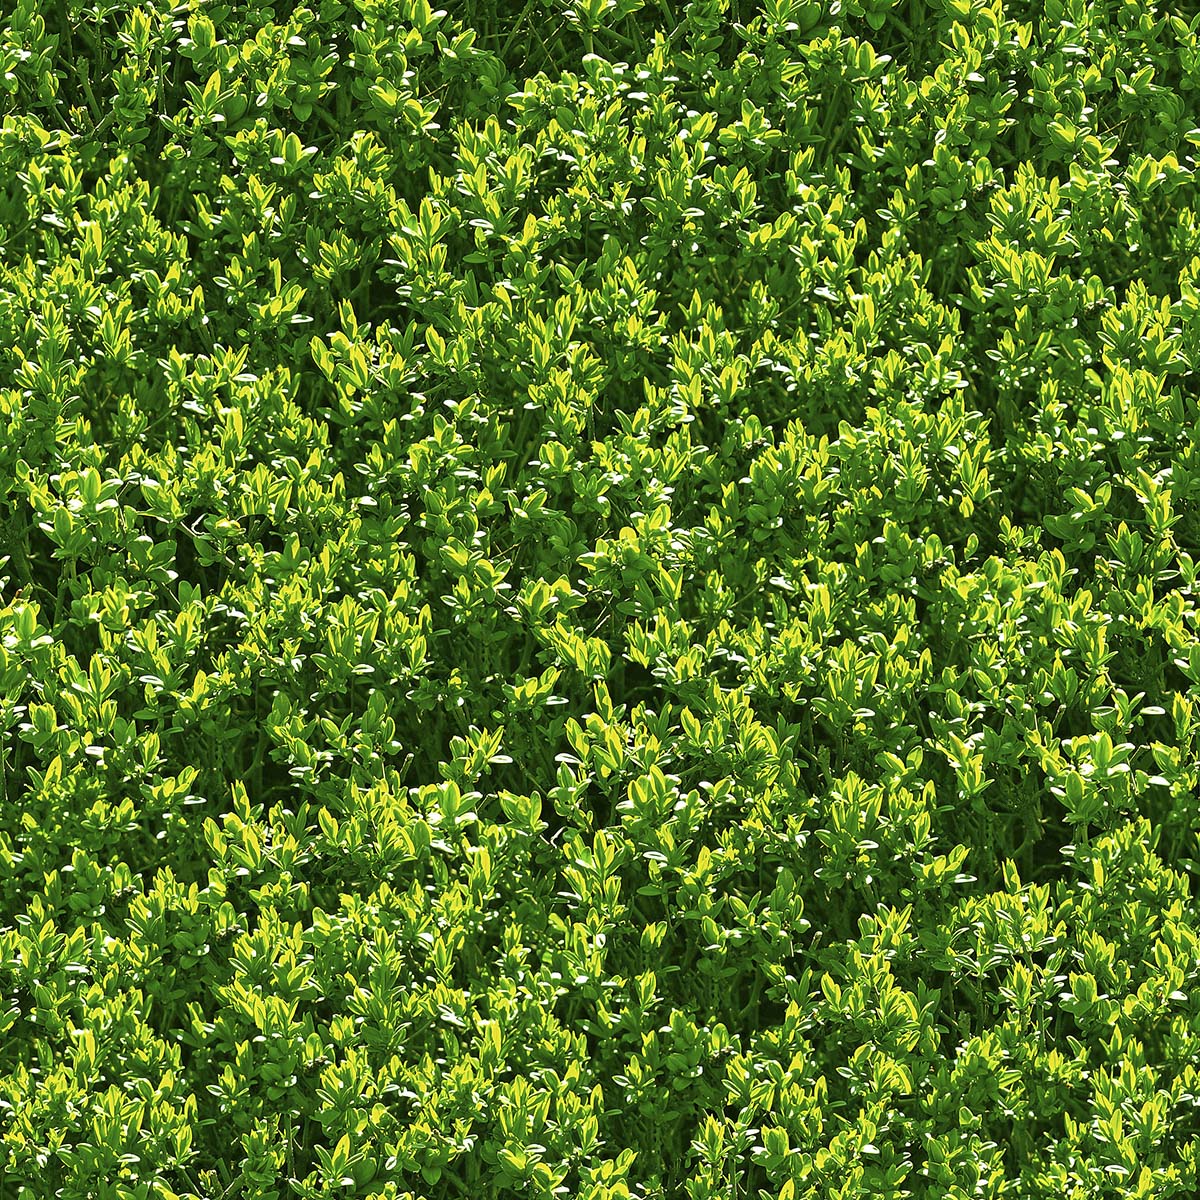 A close up of a green bush